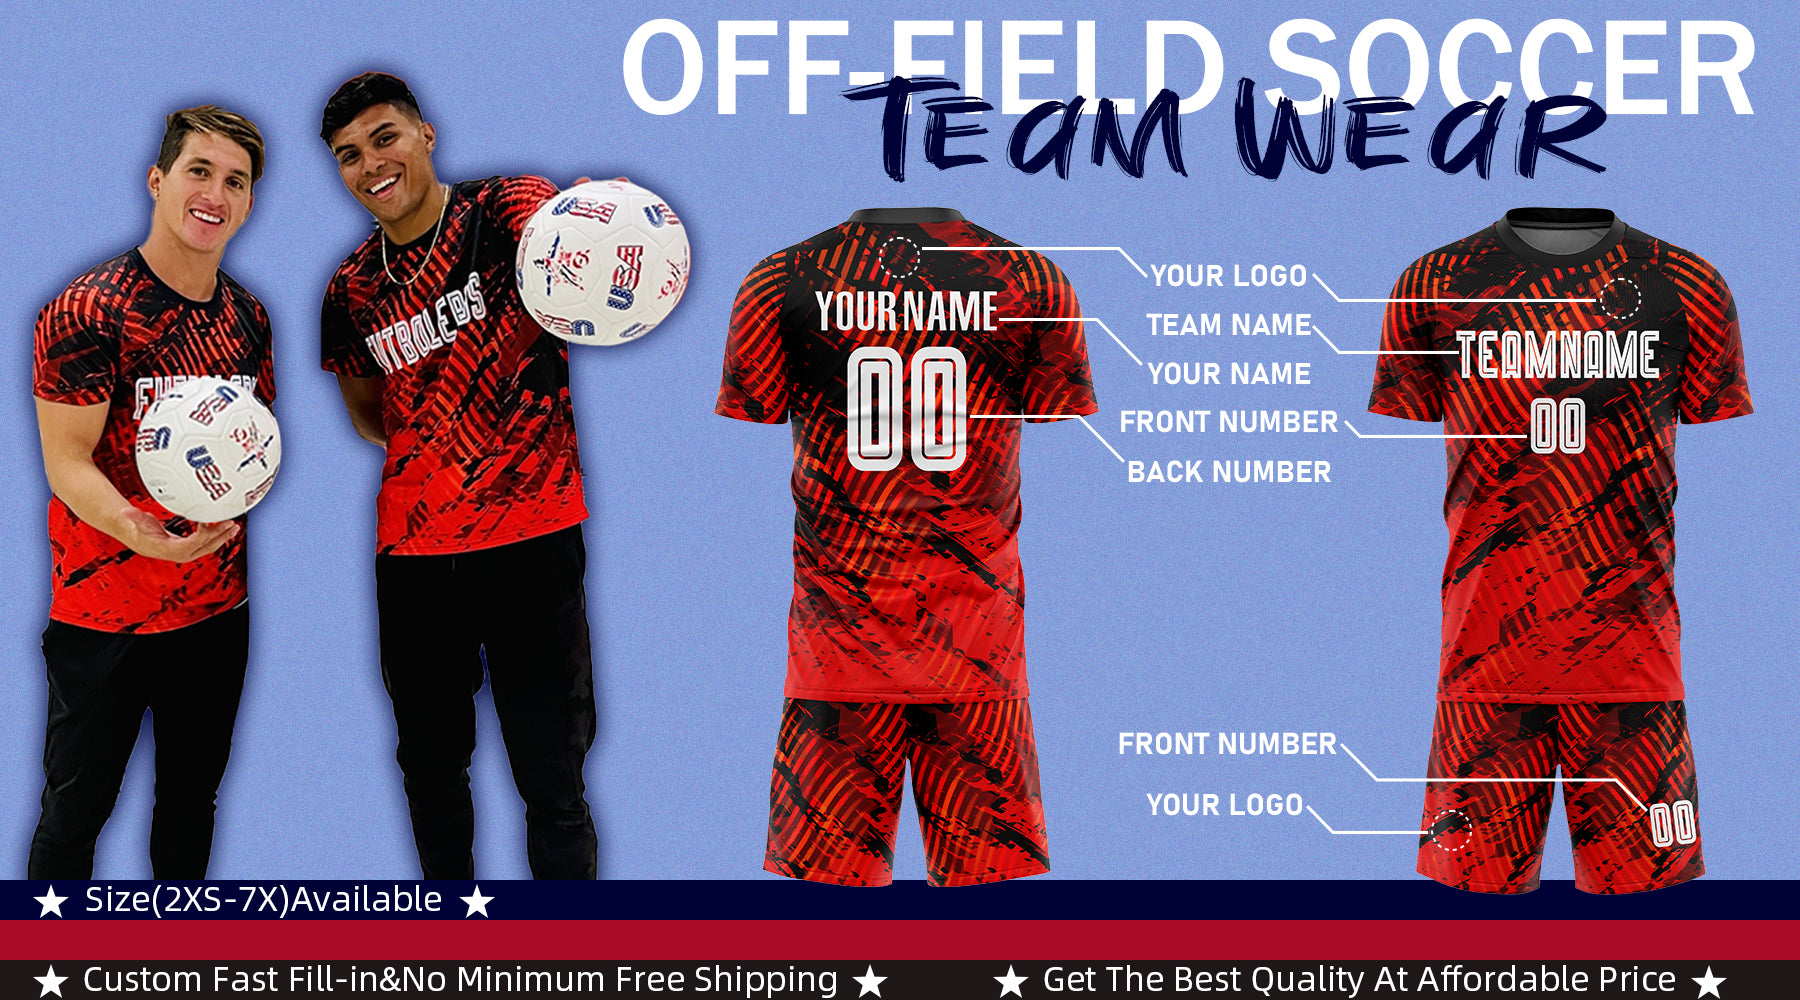 Custom Soccer Jerseys Maker: Personalized Soccer Shirts